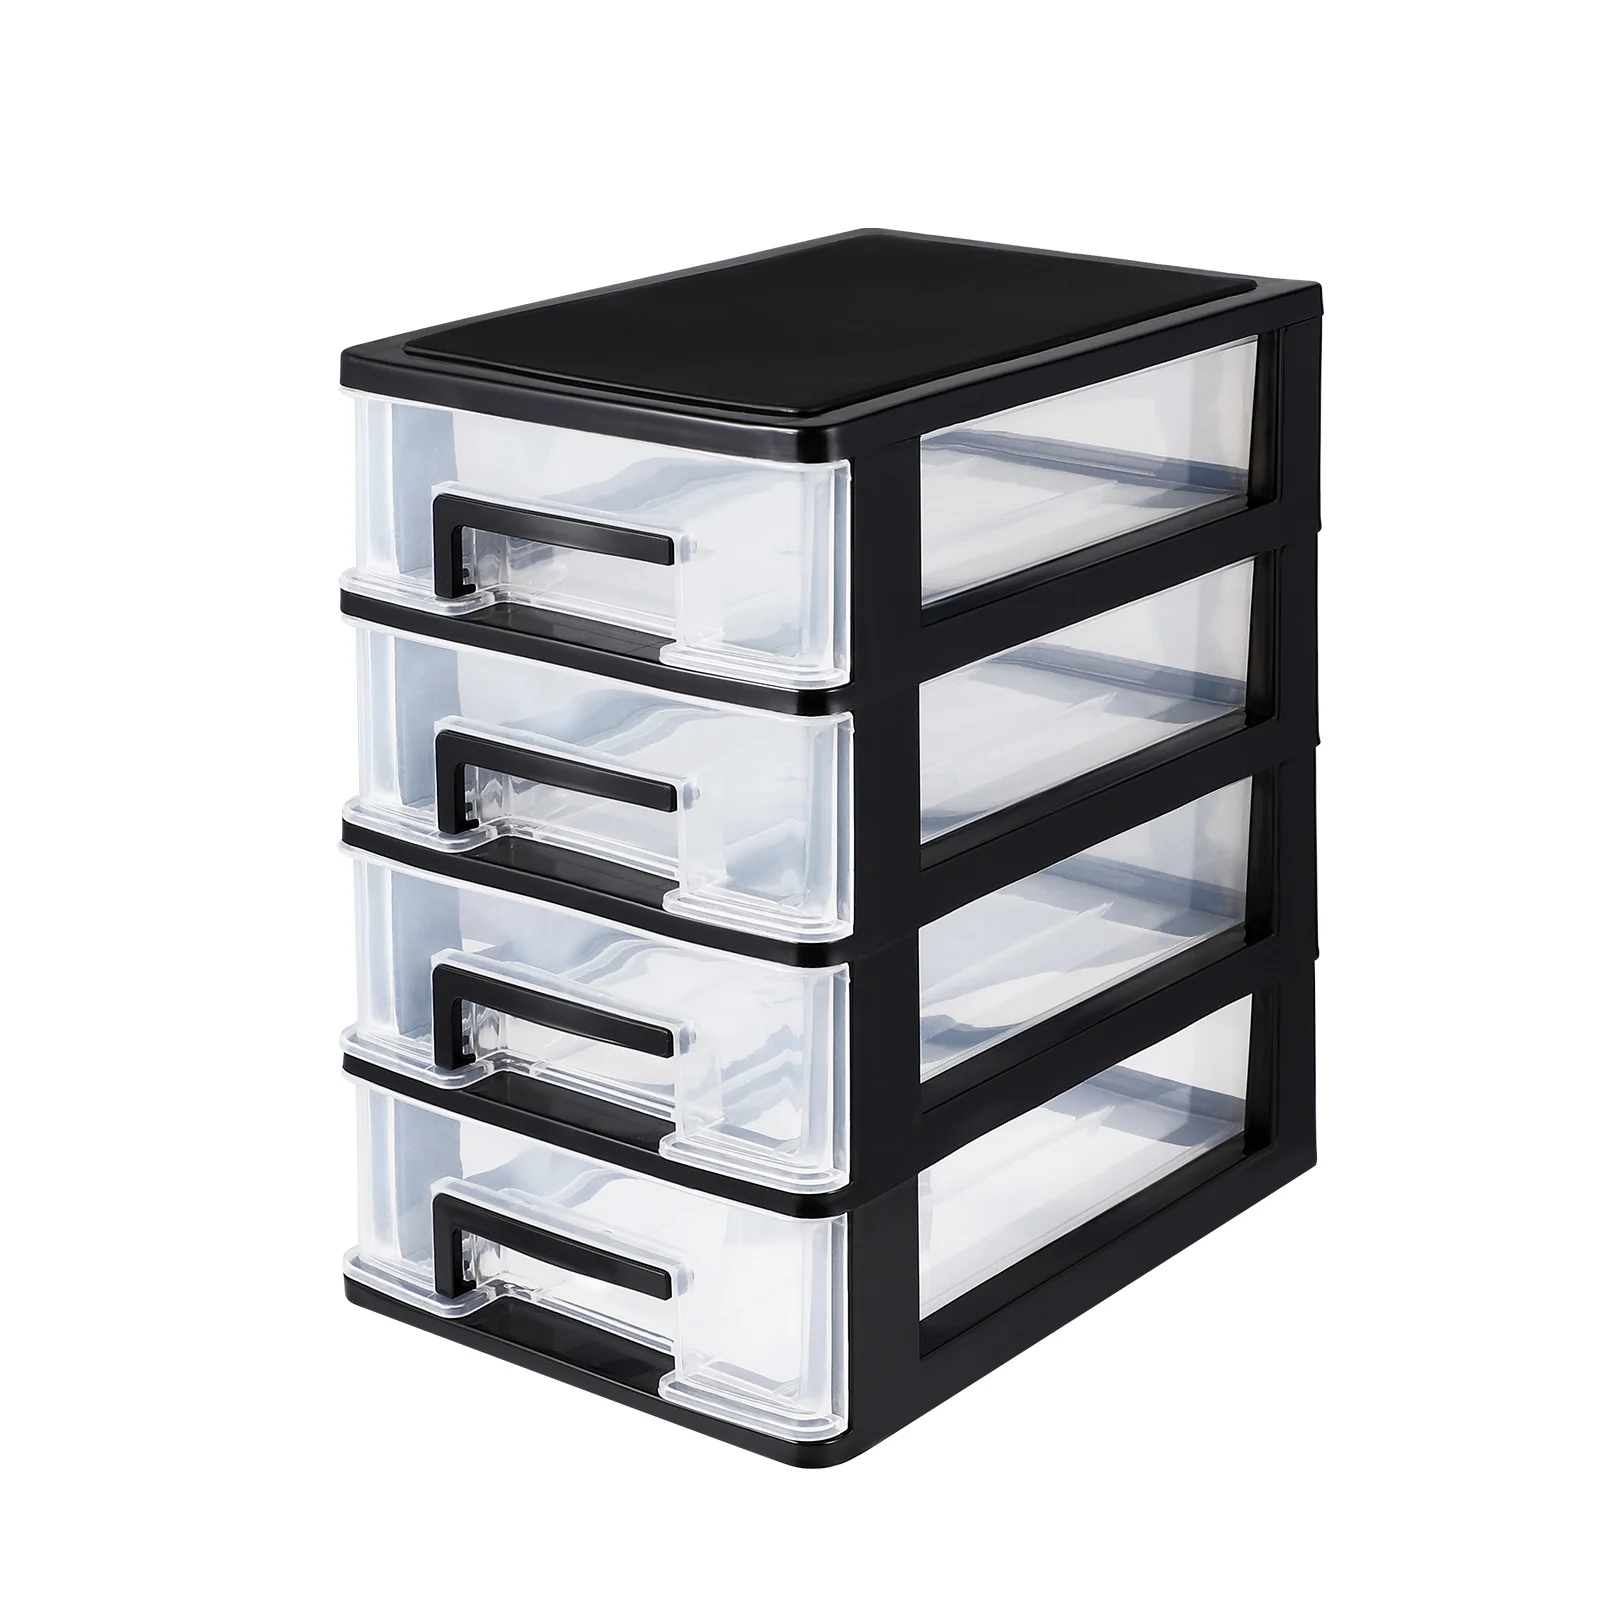 

Storage Drawerdrawers Organizer Box Layer Multi Shelfcabinet Desktopcloset Type Furniture Container Desk Bins Office Mini